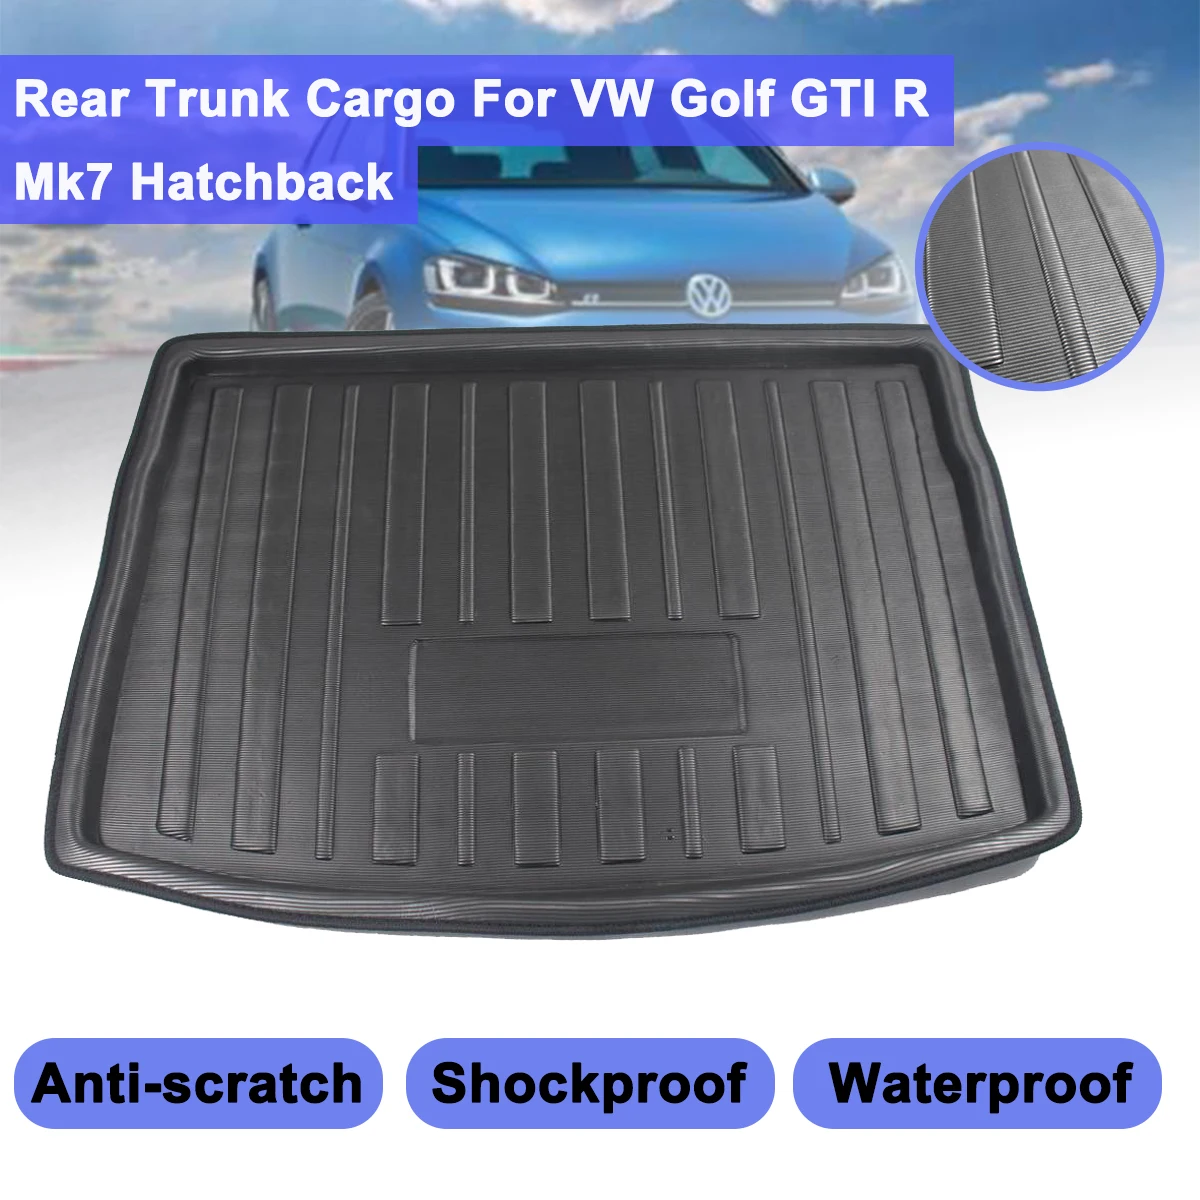 

Cargo Liner Boot Tray For VW Golf GTI R Mk7 Hatchback 2013 2014 2015 2016 - 2018 Rear Trunk Cover Matt Mat Floor Carpet Kick Pad